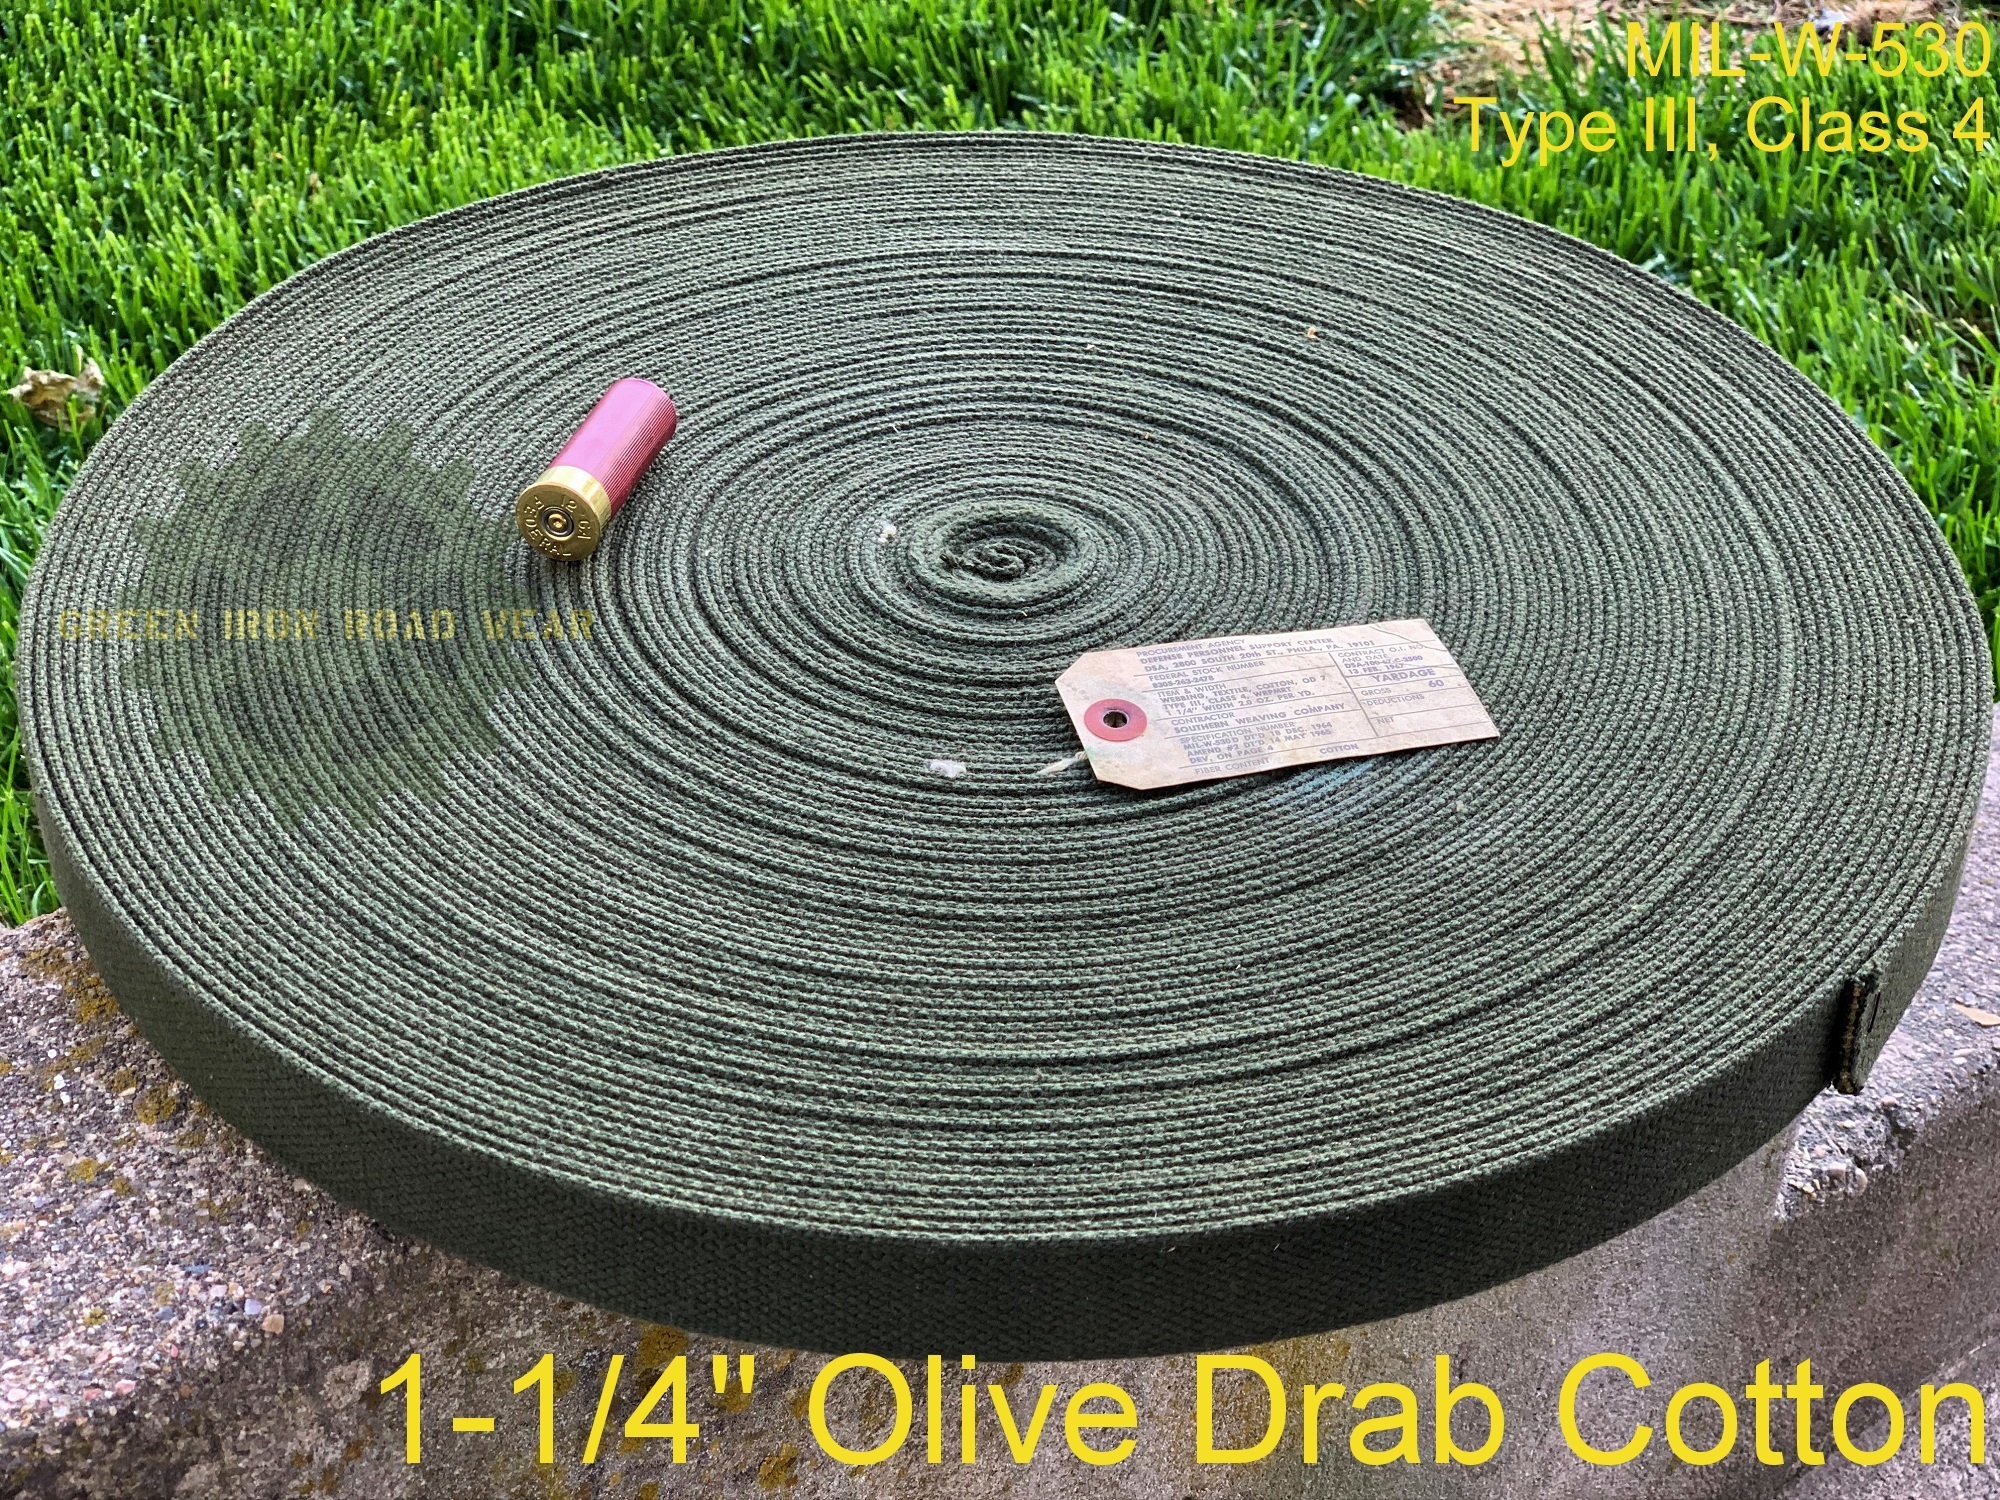 NOS Elastic Cotton Textile Webbing 1.5" x 20' Olive Drab Green MIL-W-5664 